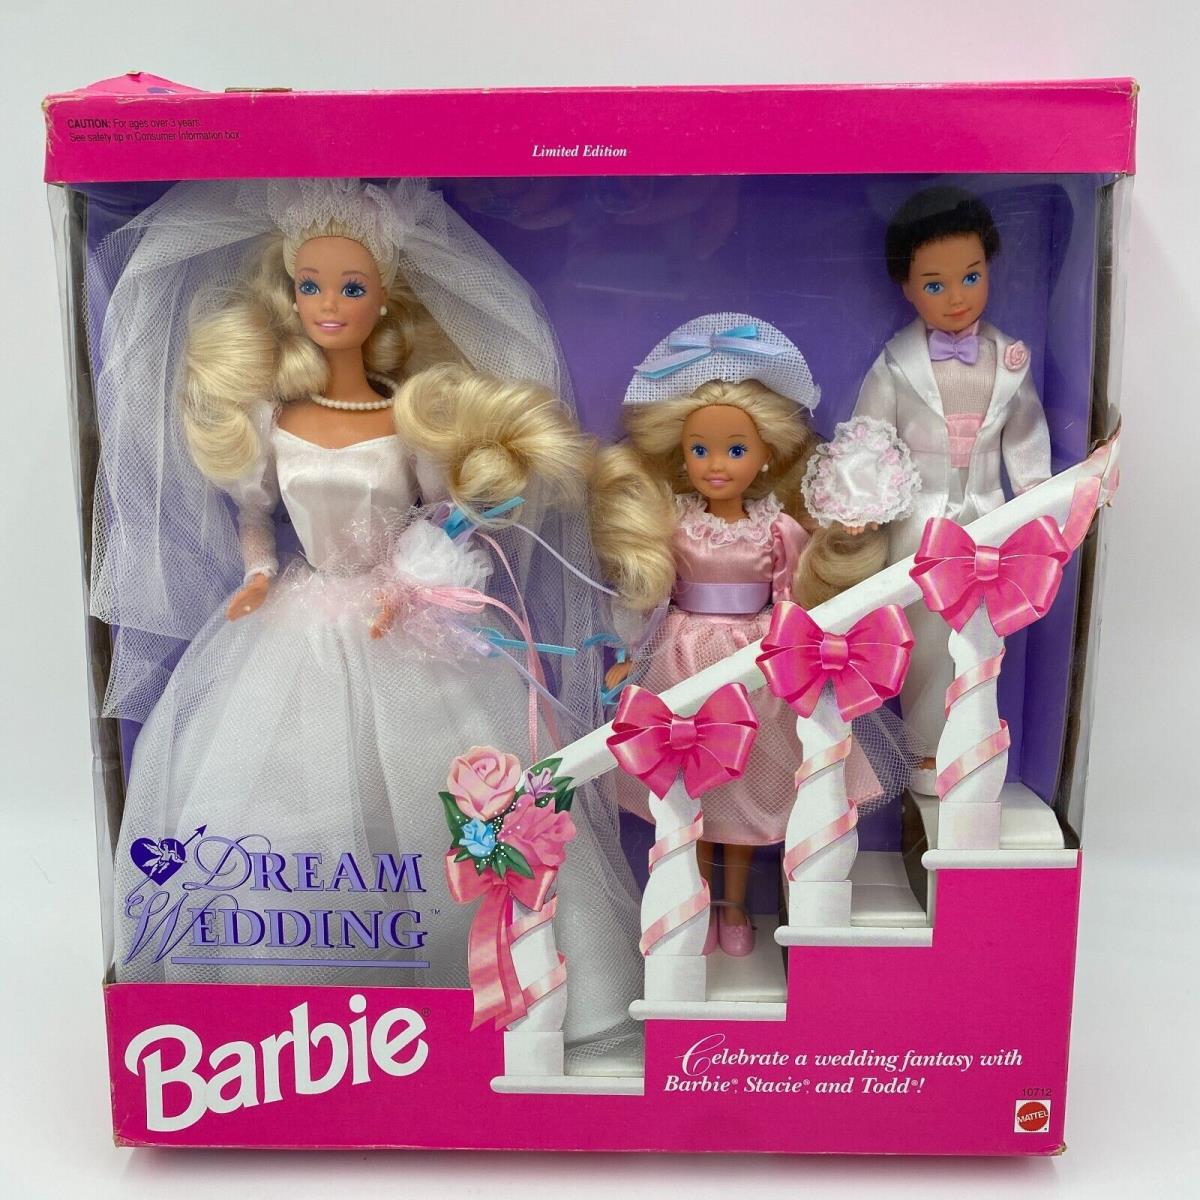 1993 Dream Wedding Barbie Stacie Todd Limited Edition Gift Set 3 Dolls